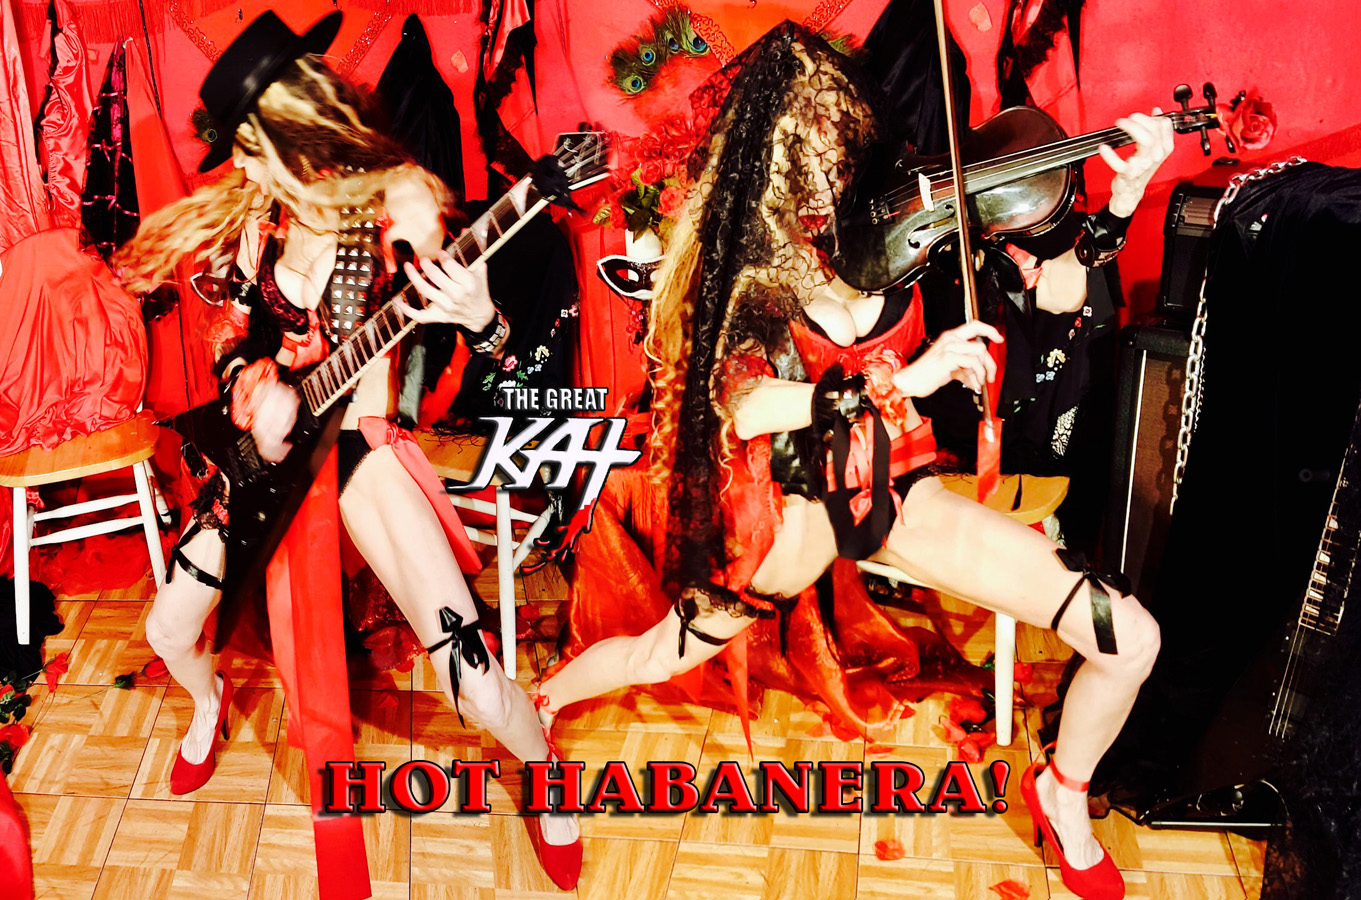 HOT HABANERA!! From The Great Kat's SARASATE'S "CARMEN FANTASY" MUSIC VIDEO!!